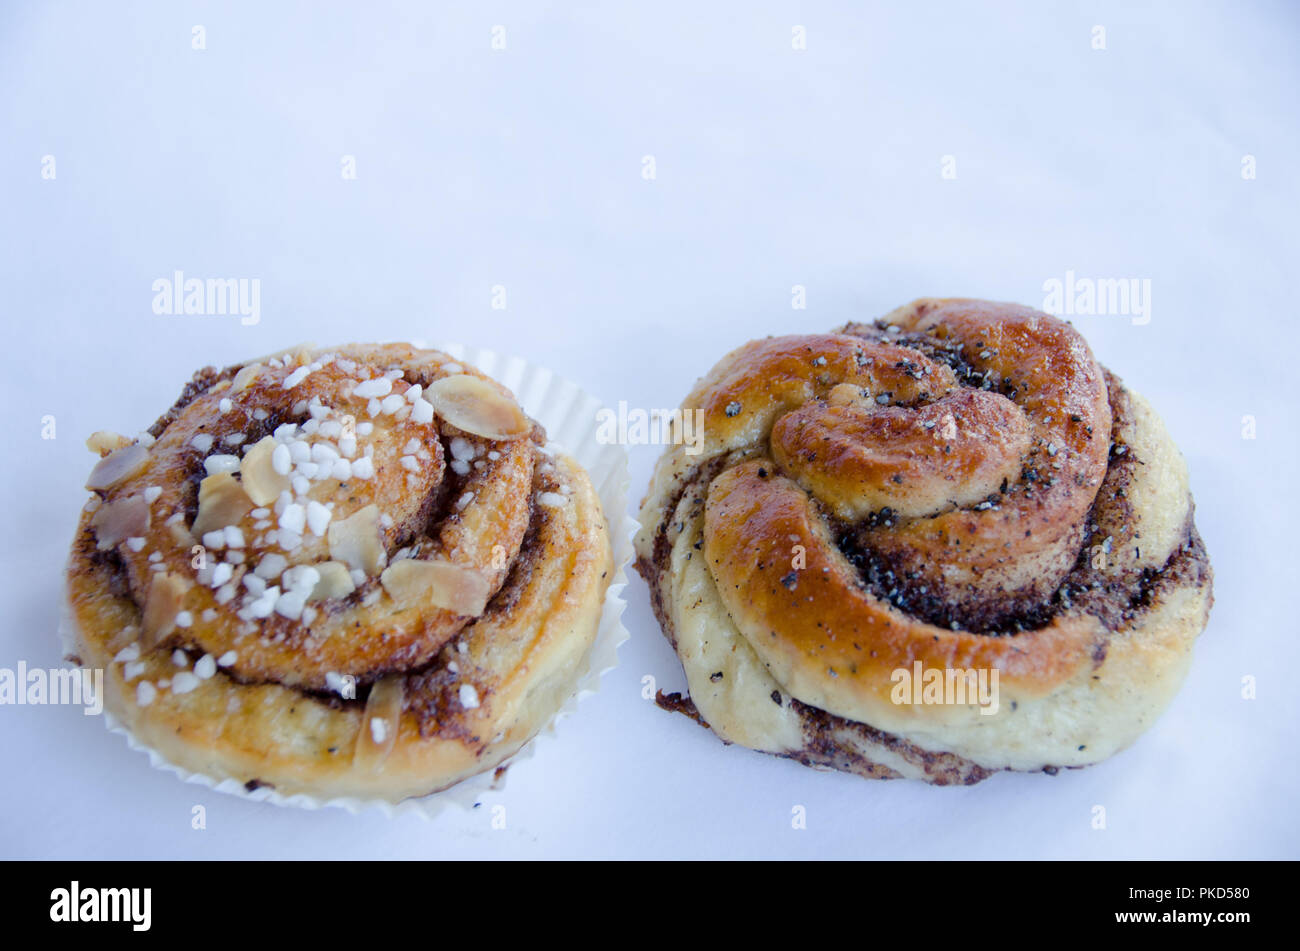 Cinnamon bun with a cardamon bun on white background Stock Photo